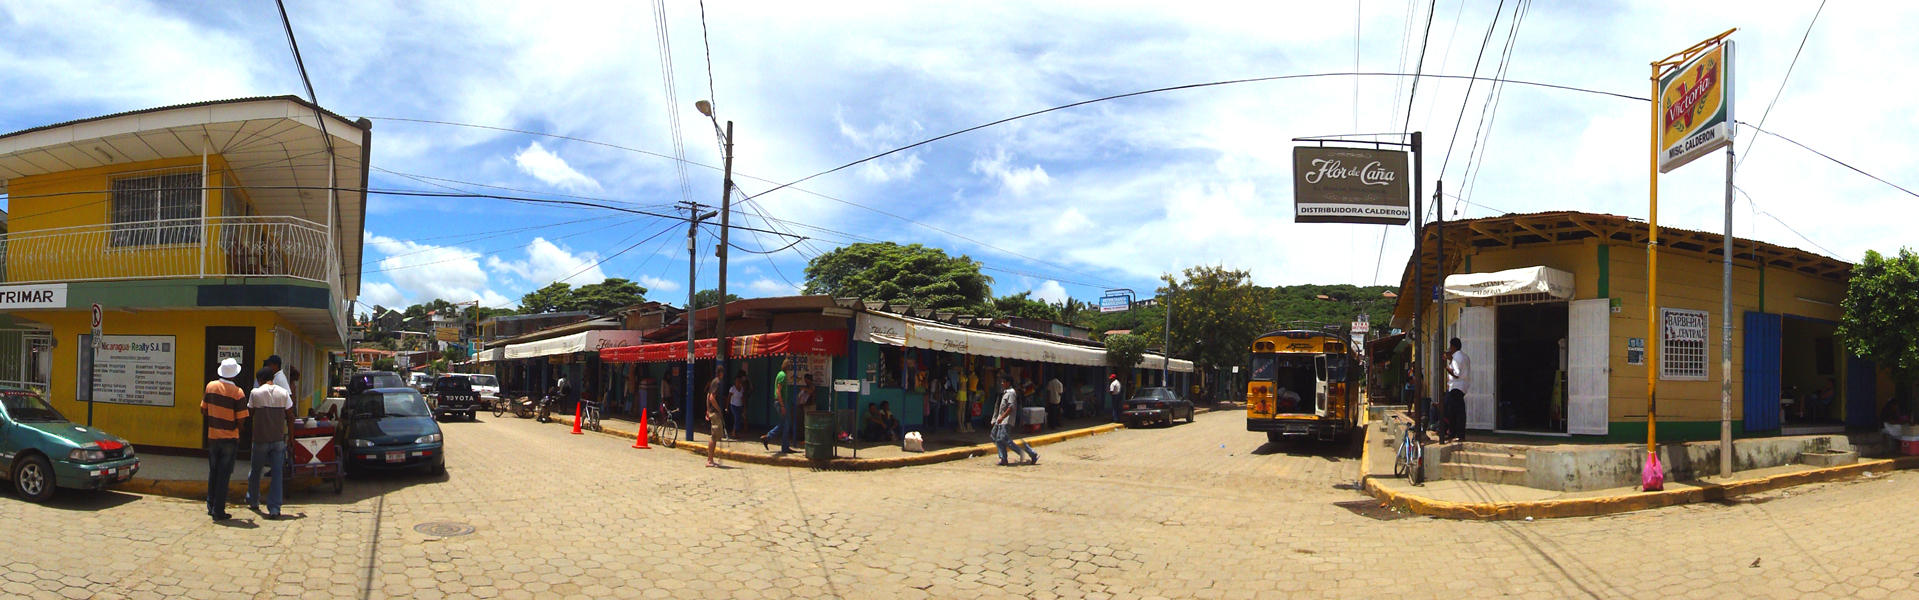 Downtown San Juan del Sur, Nicaragua